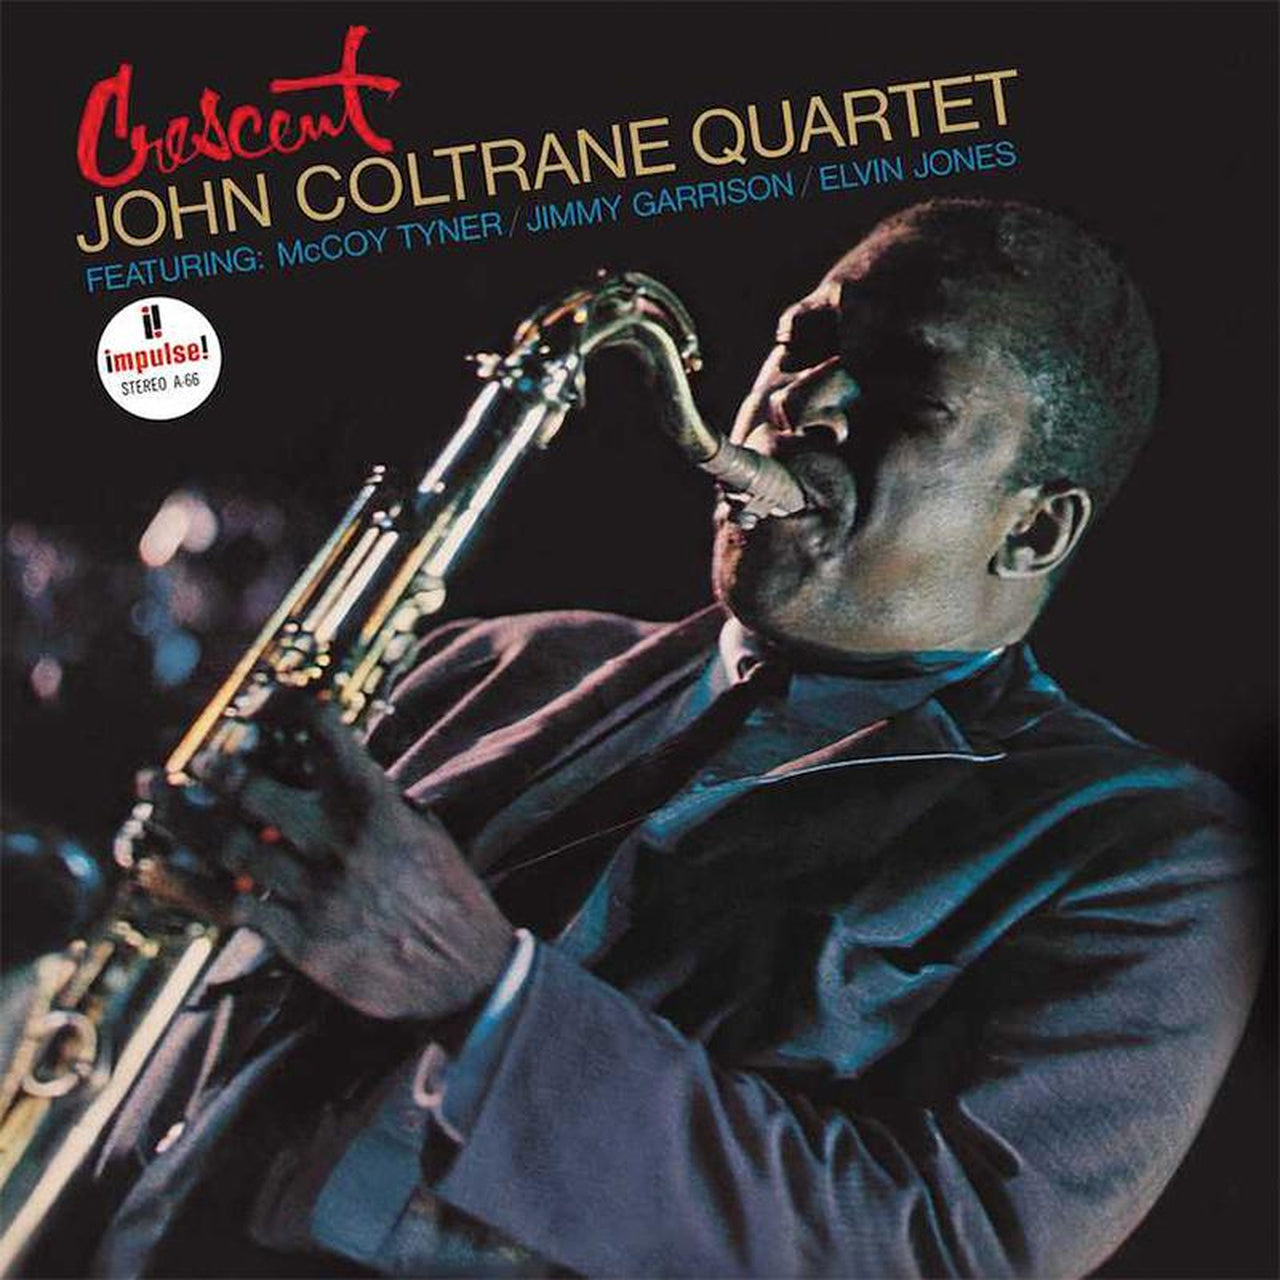 John Coltrane Quartet - Crescent (Vinyl LP)